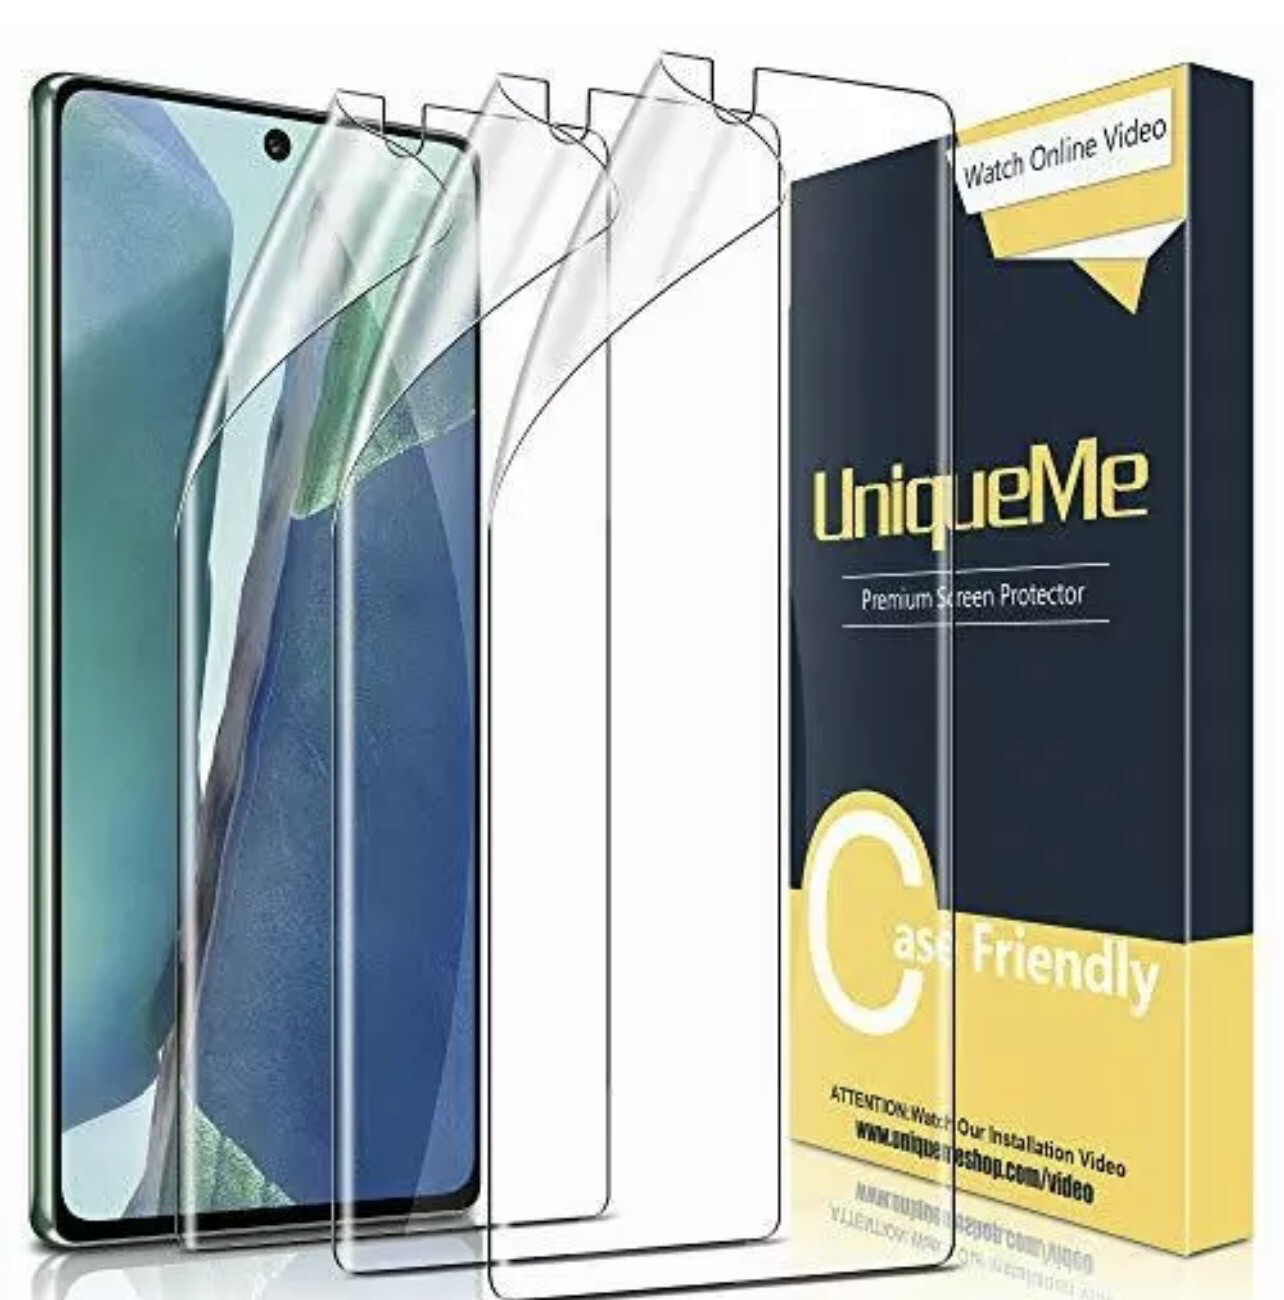 UniqueMe Premium Screen Protecter Note 10